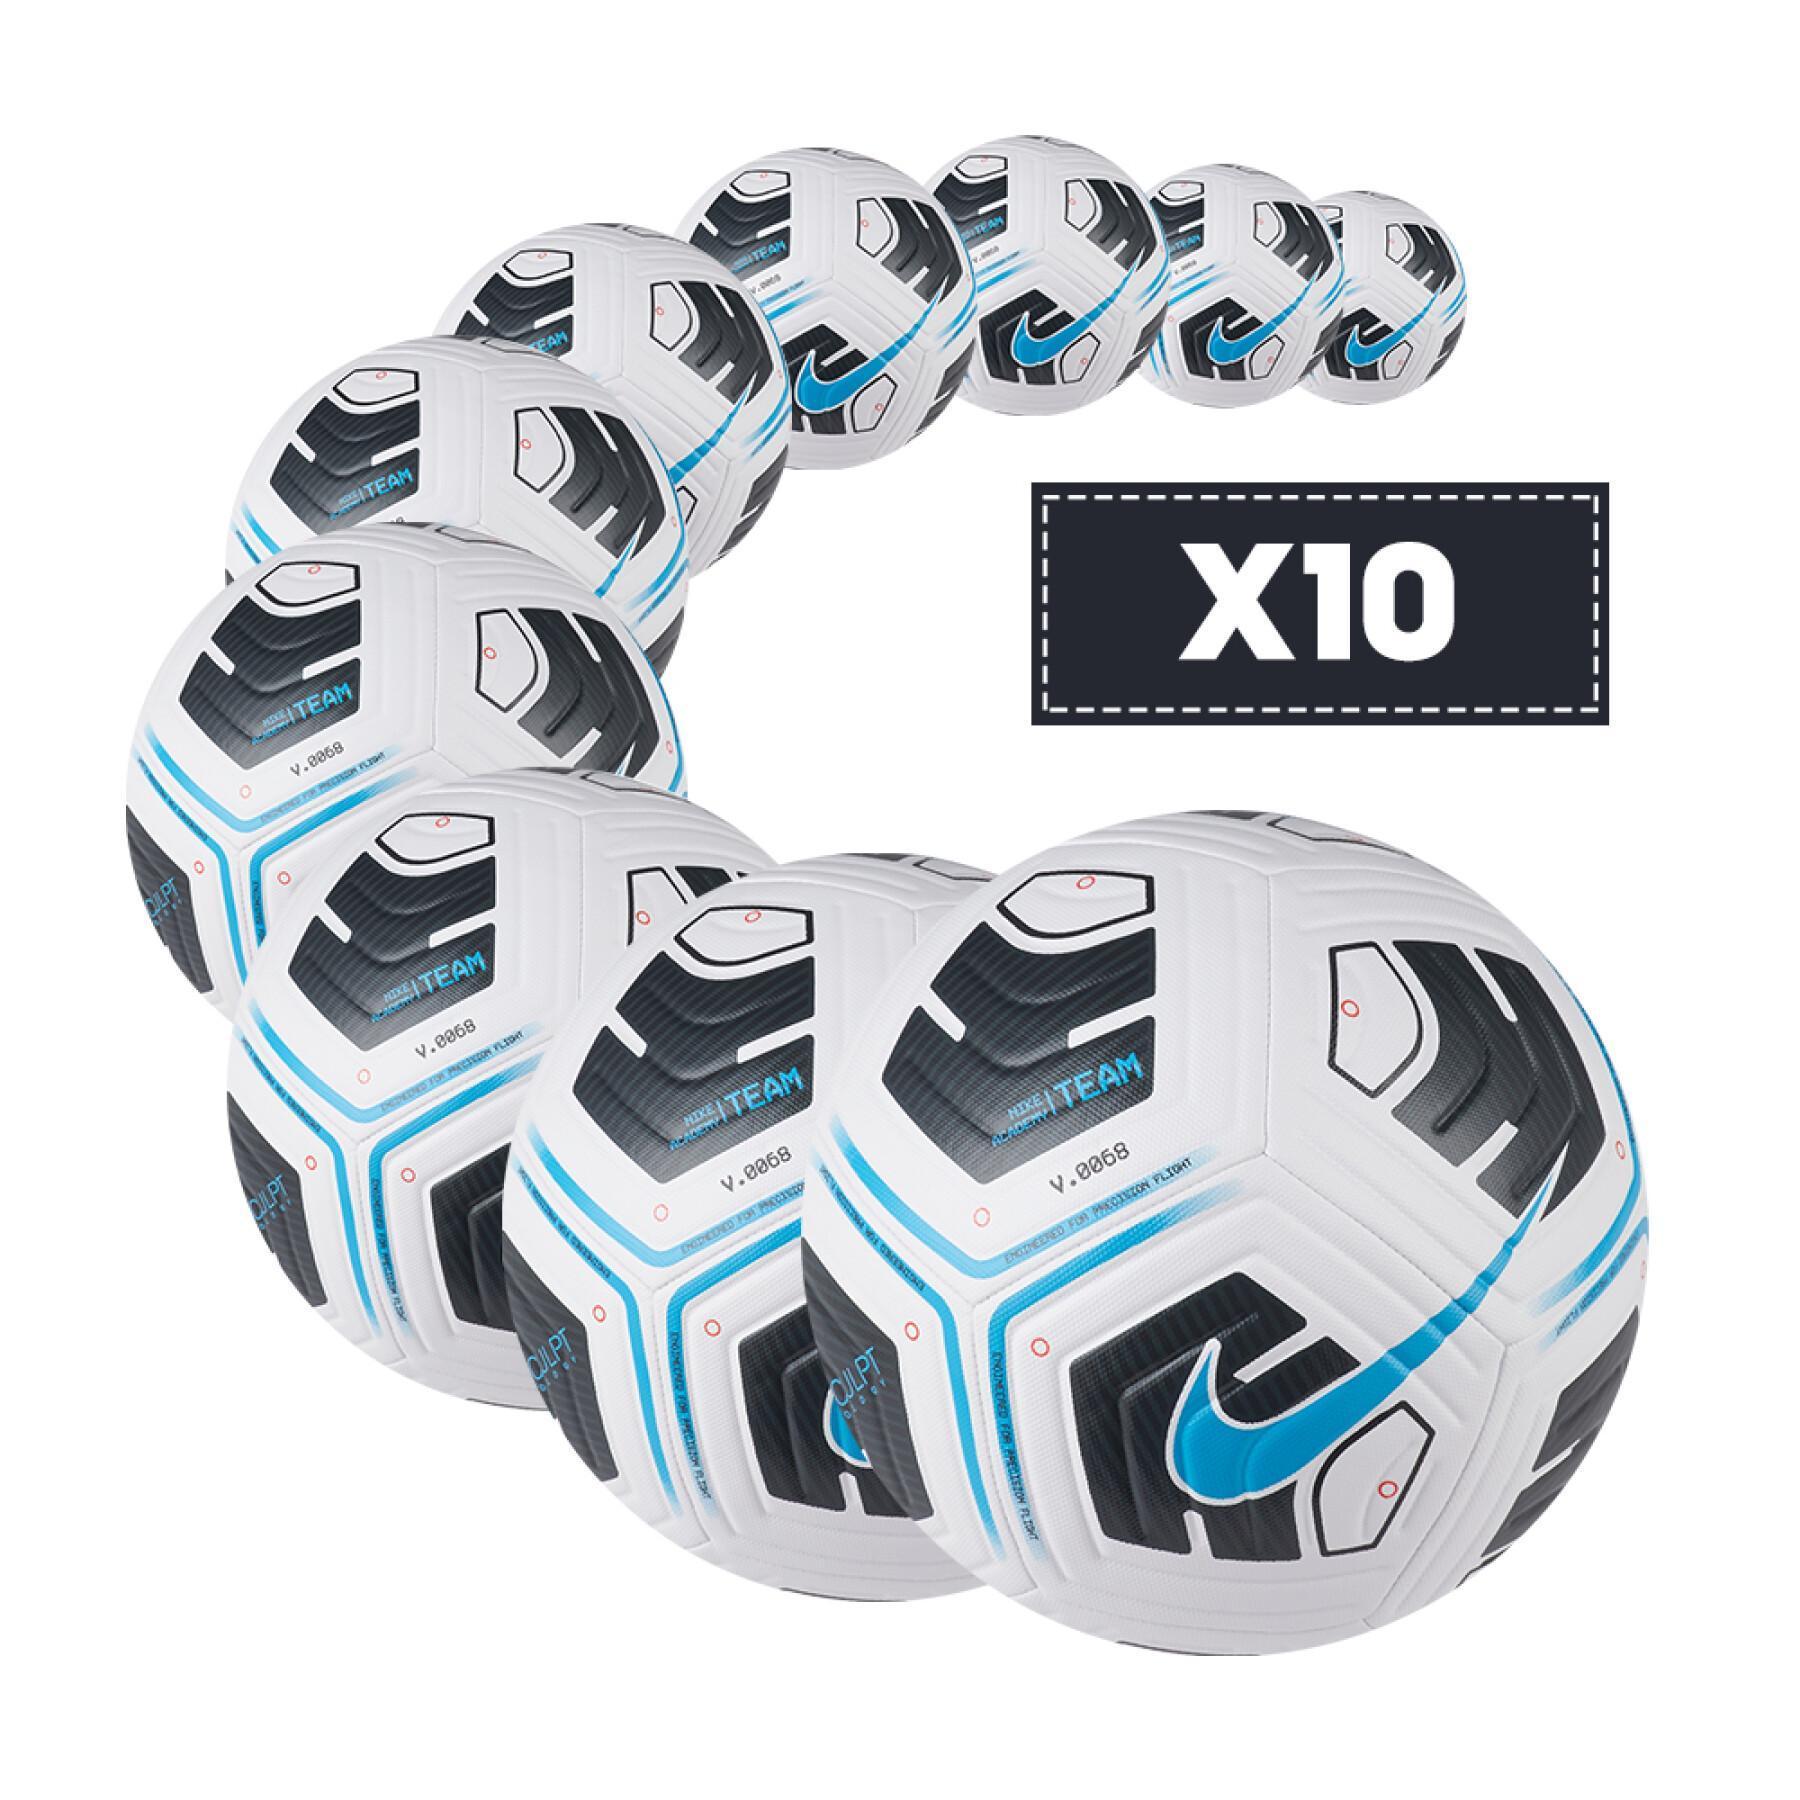 Lot de 10 Ballons Nike Academy - Lots de ballons - Packs - Espace club